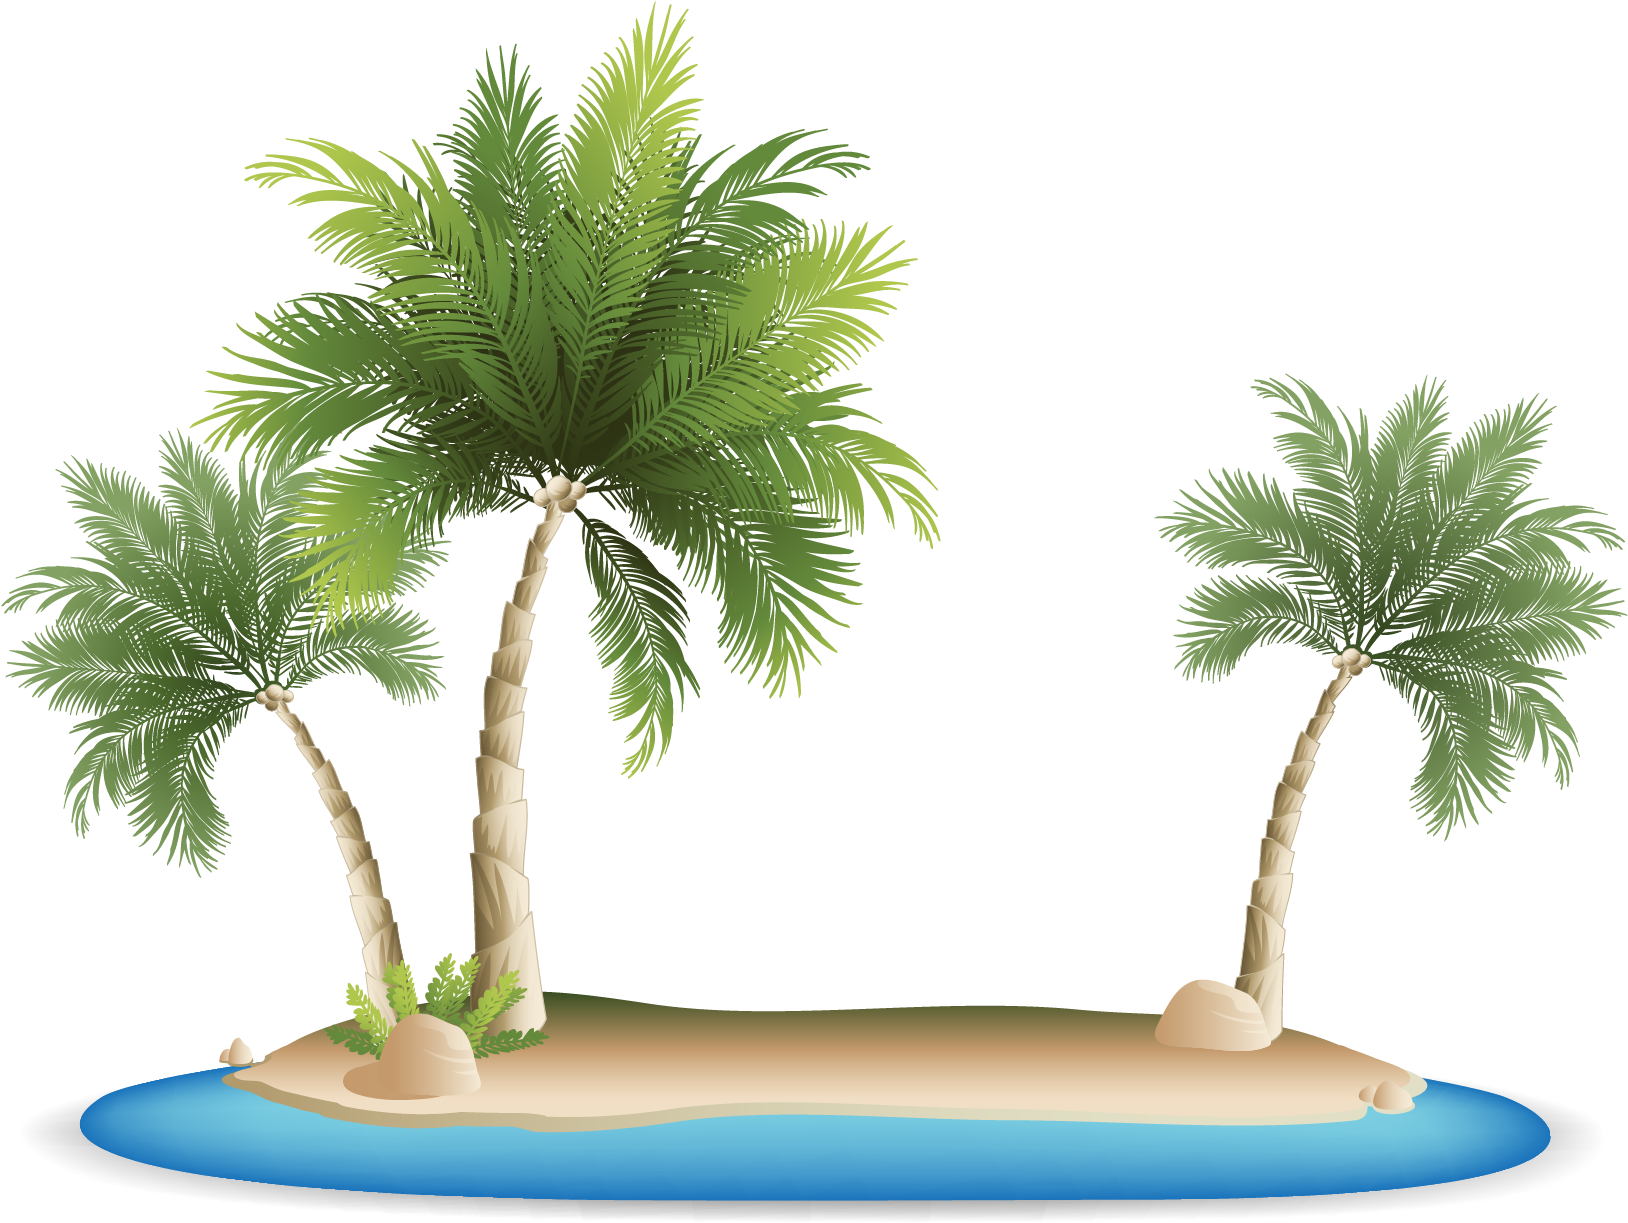 Palm Islands Tropical Islands Resort Clip Art - Palm Tree Beach Clipart (1667x1667)